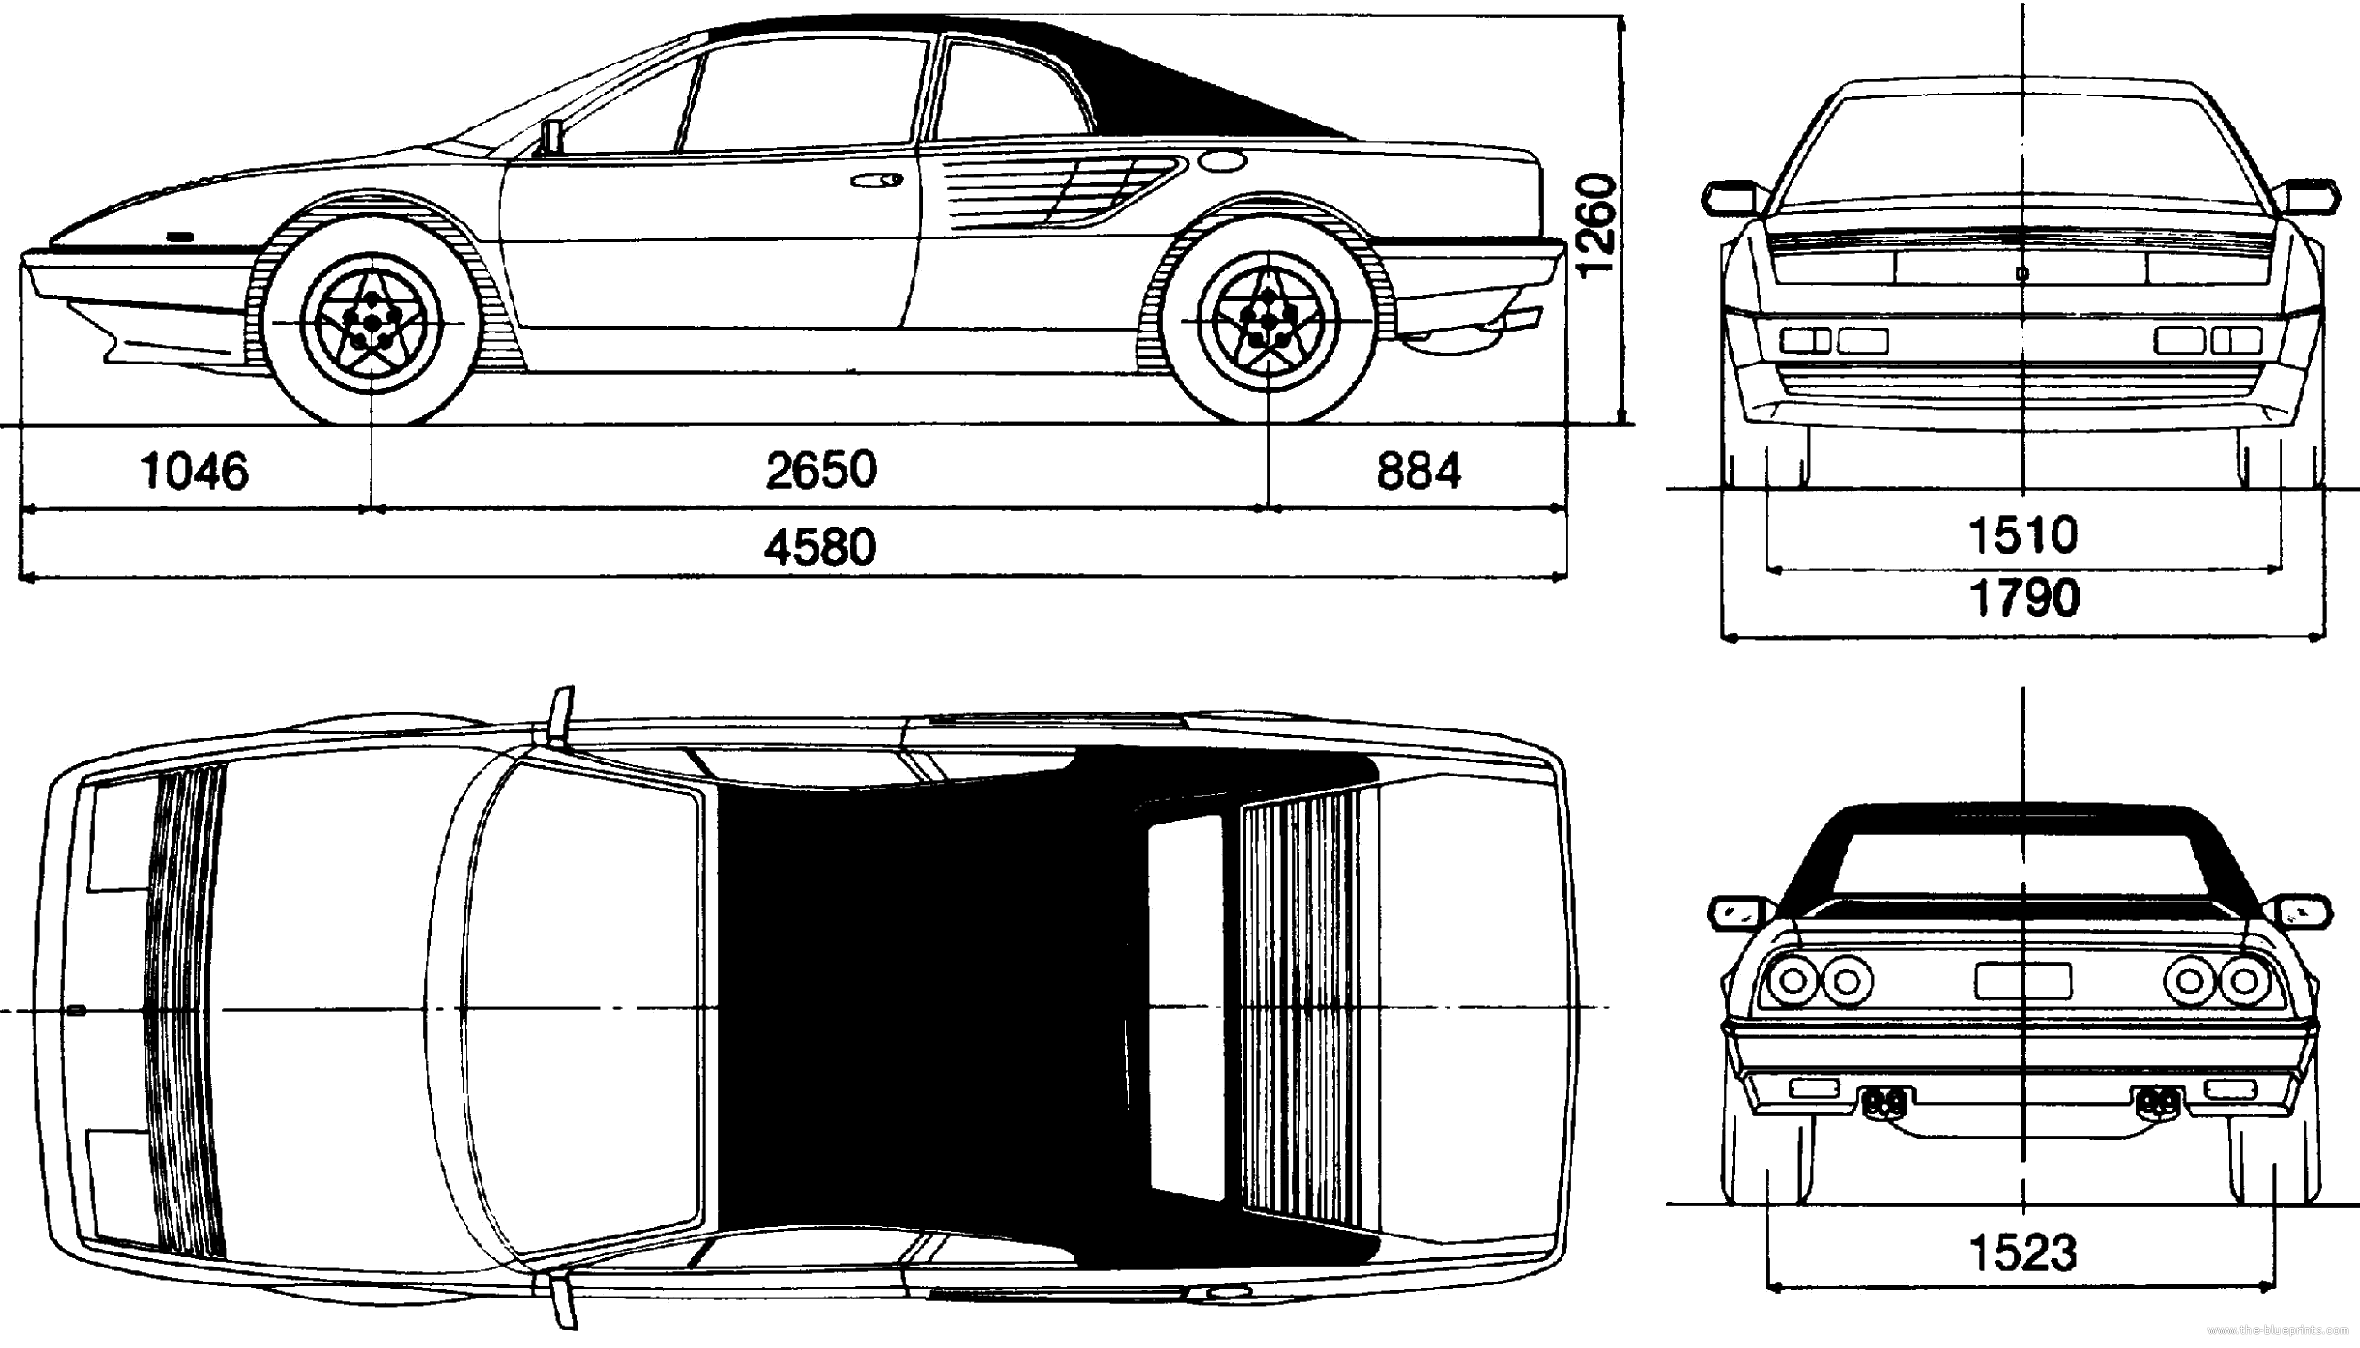 http://www.the-blueprints.com/blueprints-depot/cars/ferrari/ferrari-mondial-cabriolet-1983-2.gif